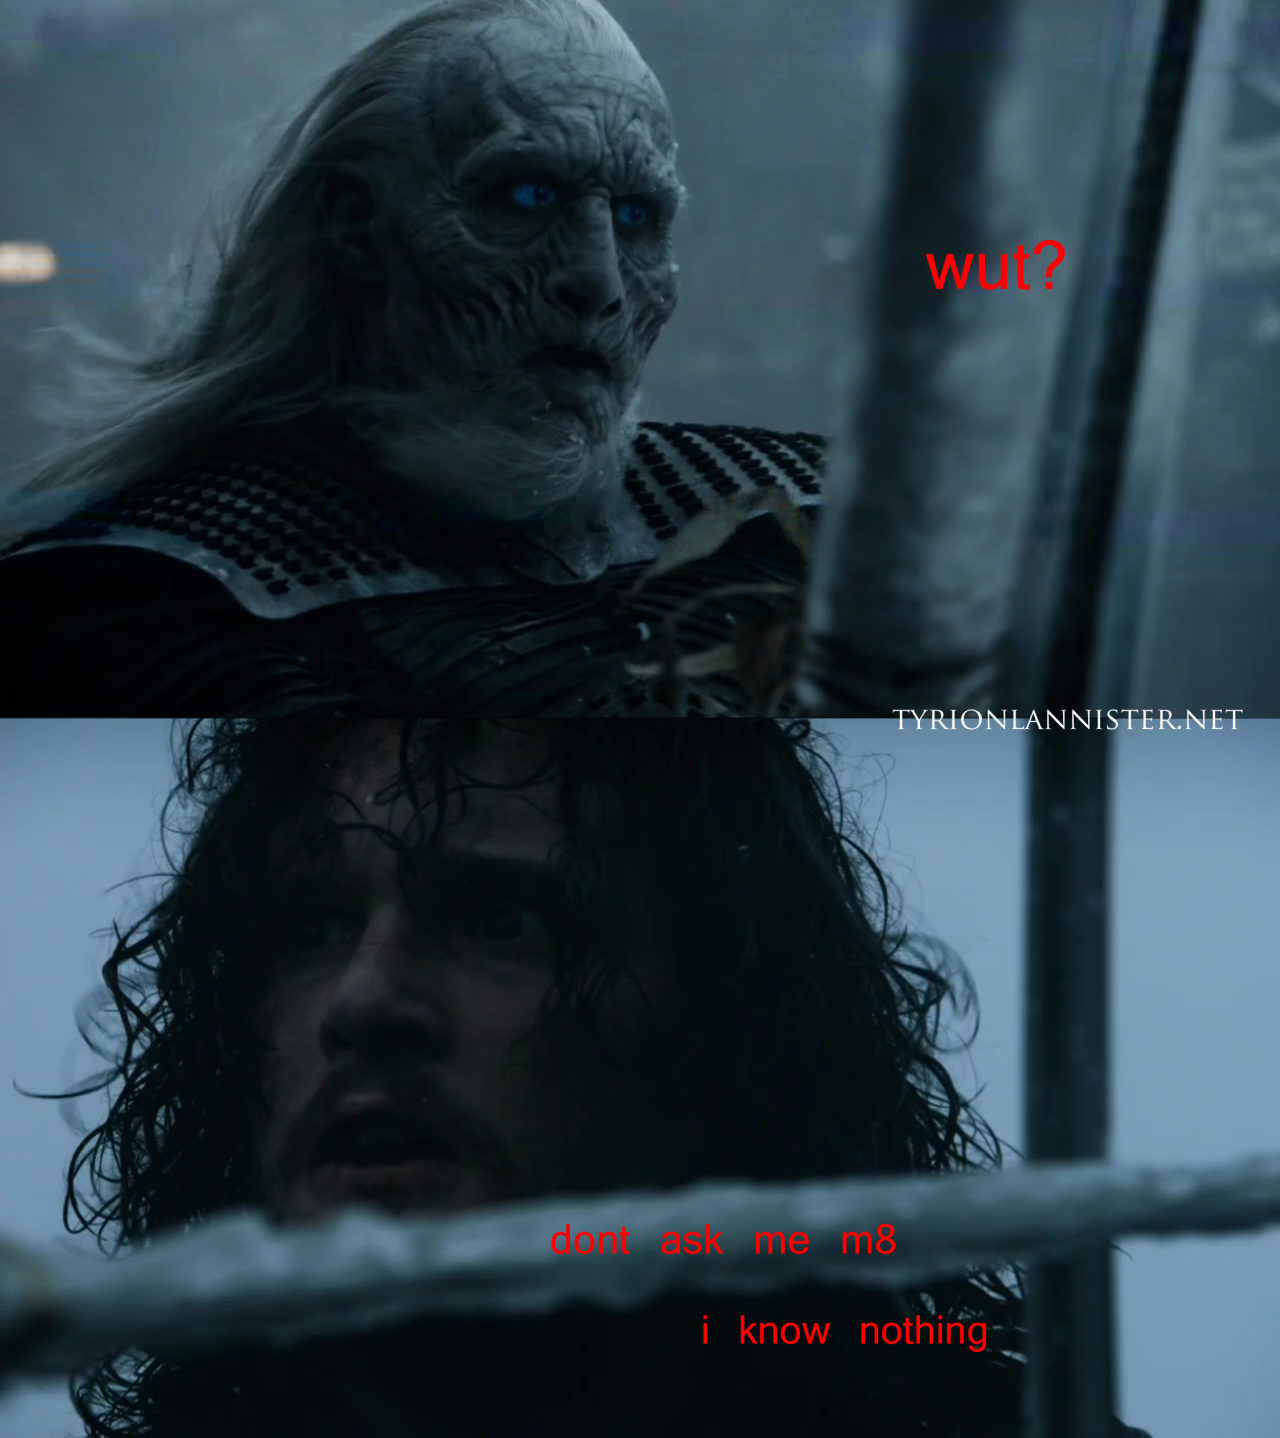 Jon Snow still knows nothing